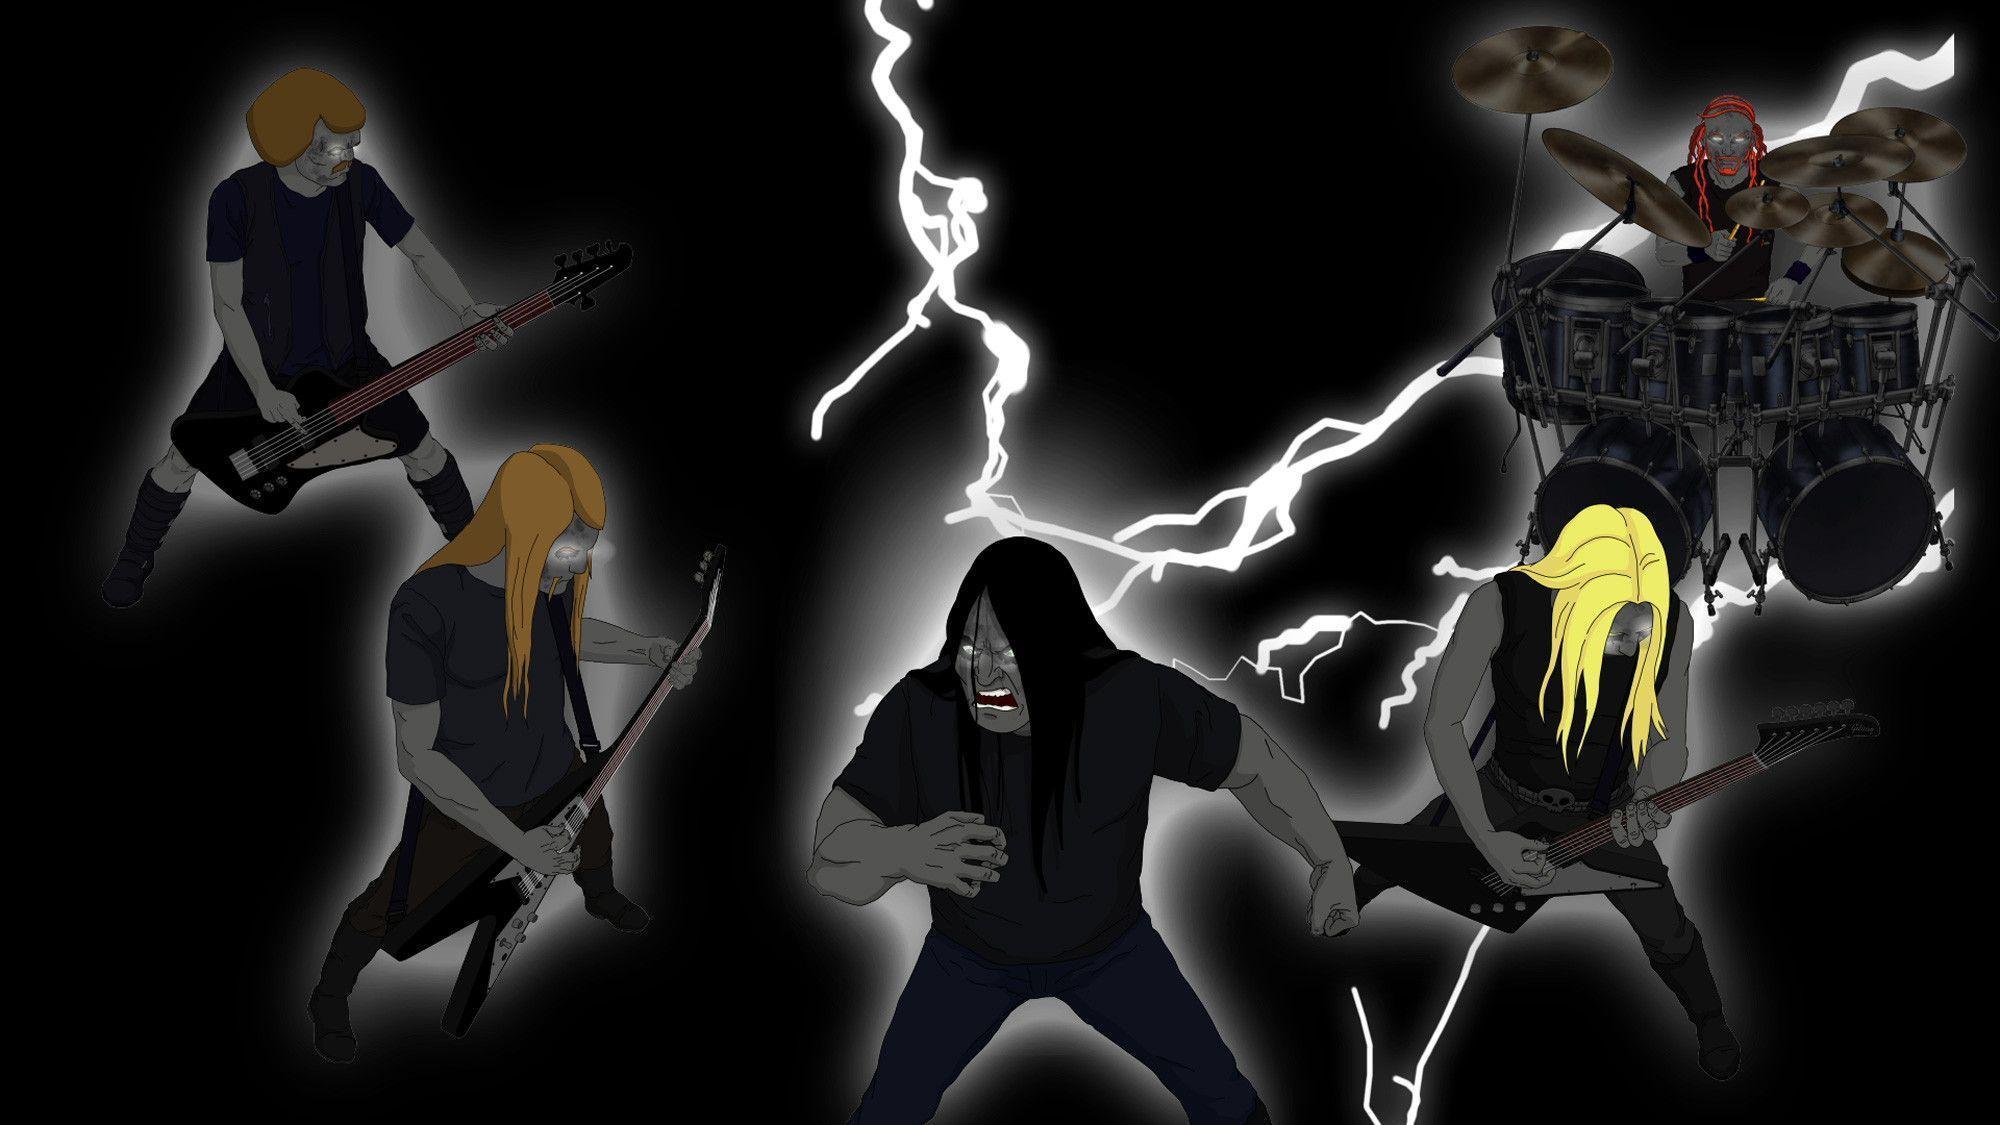 Dethklok heavy metal music cartoons hard rock band groups